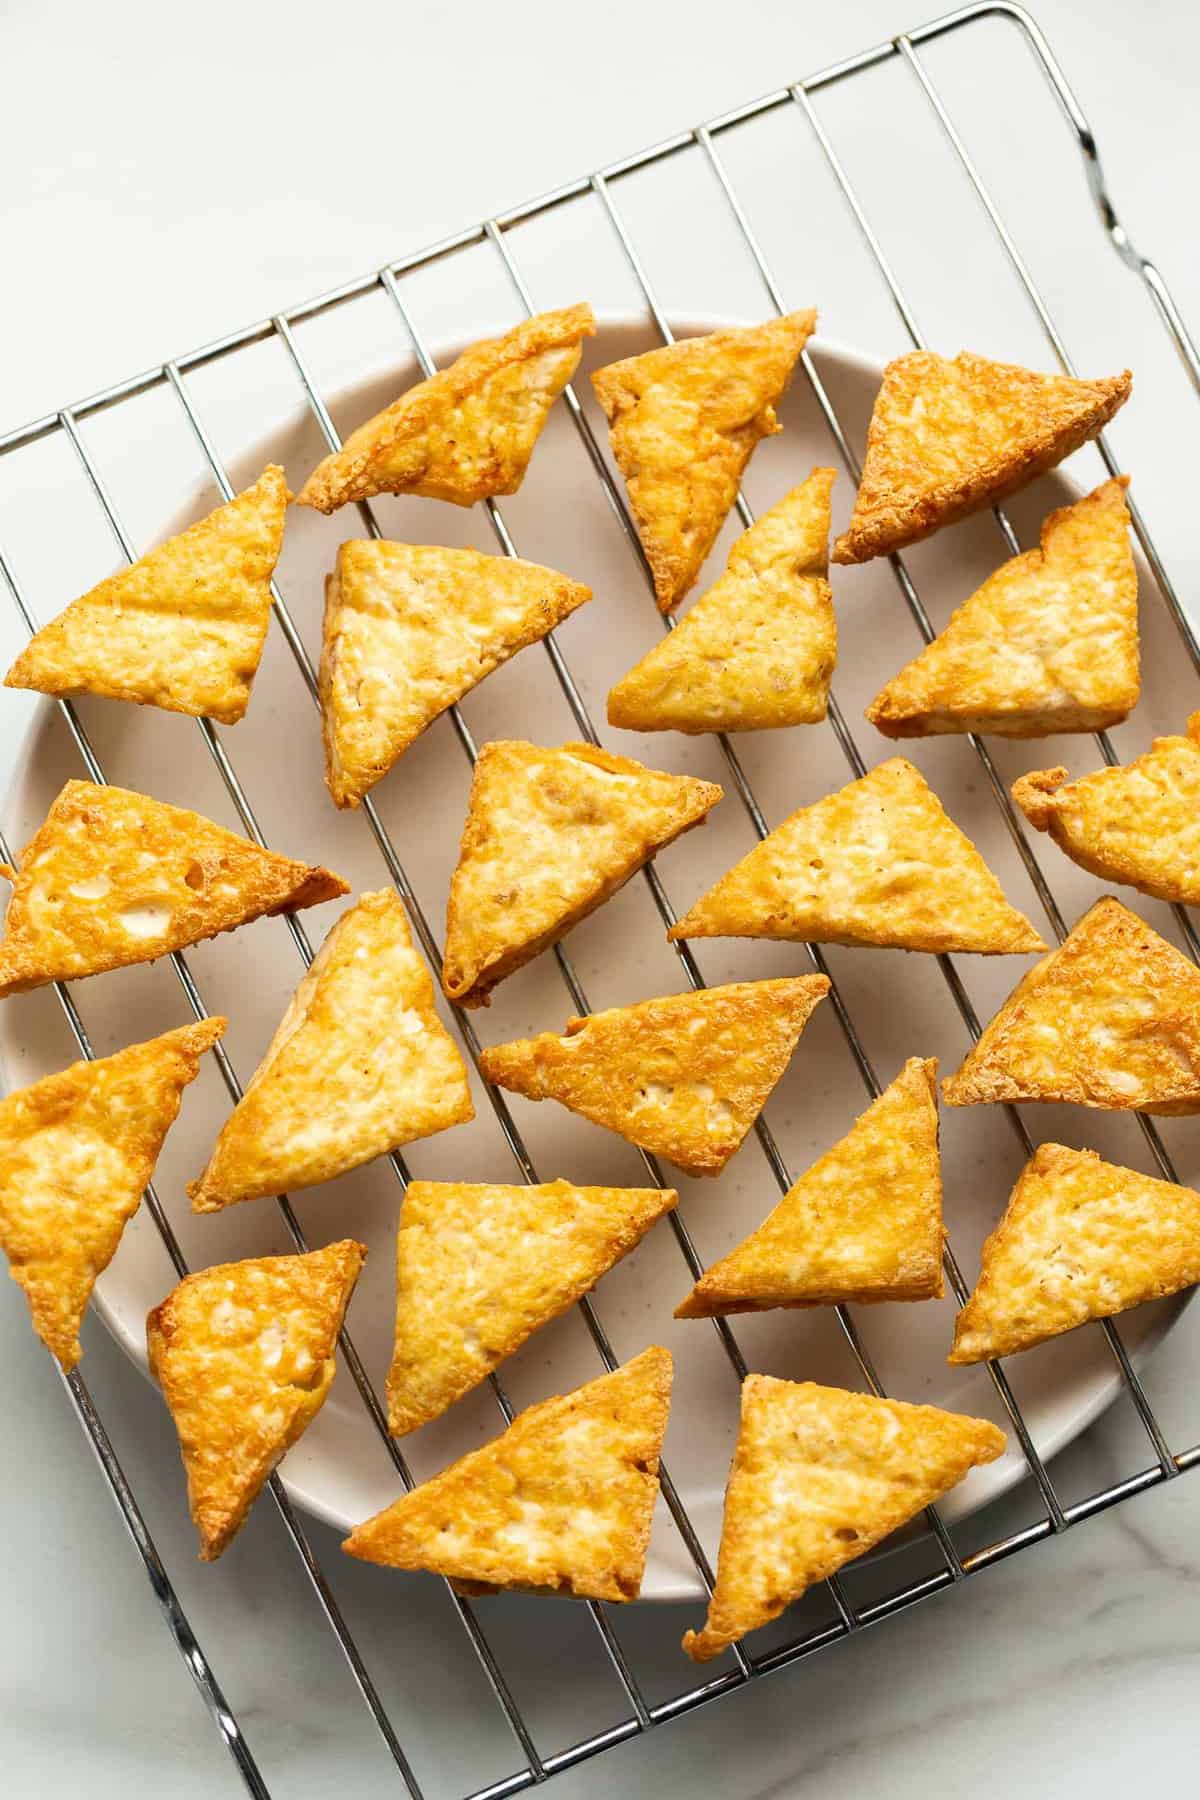 Triangles of fried, golden medium firm tofu.